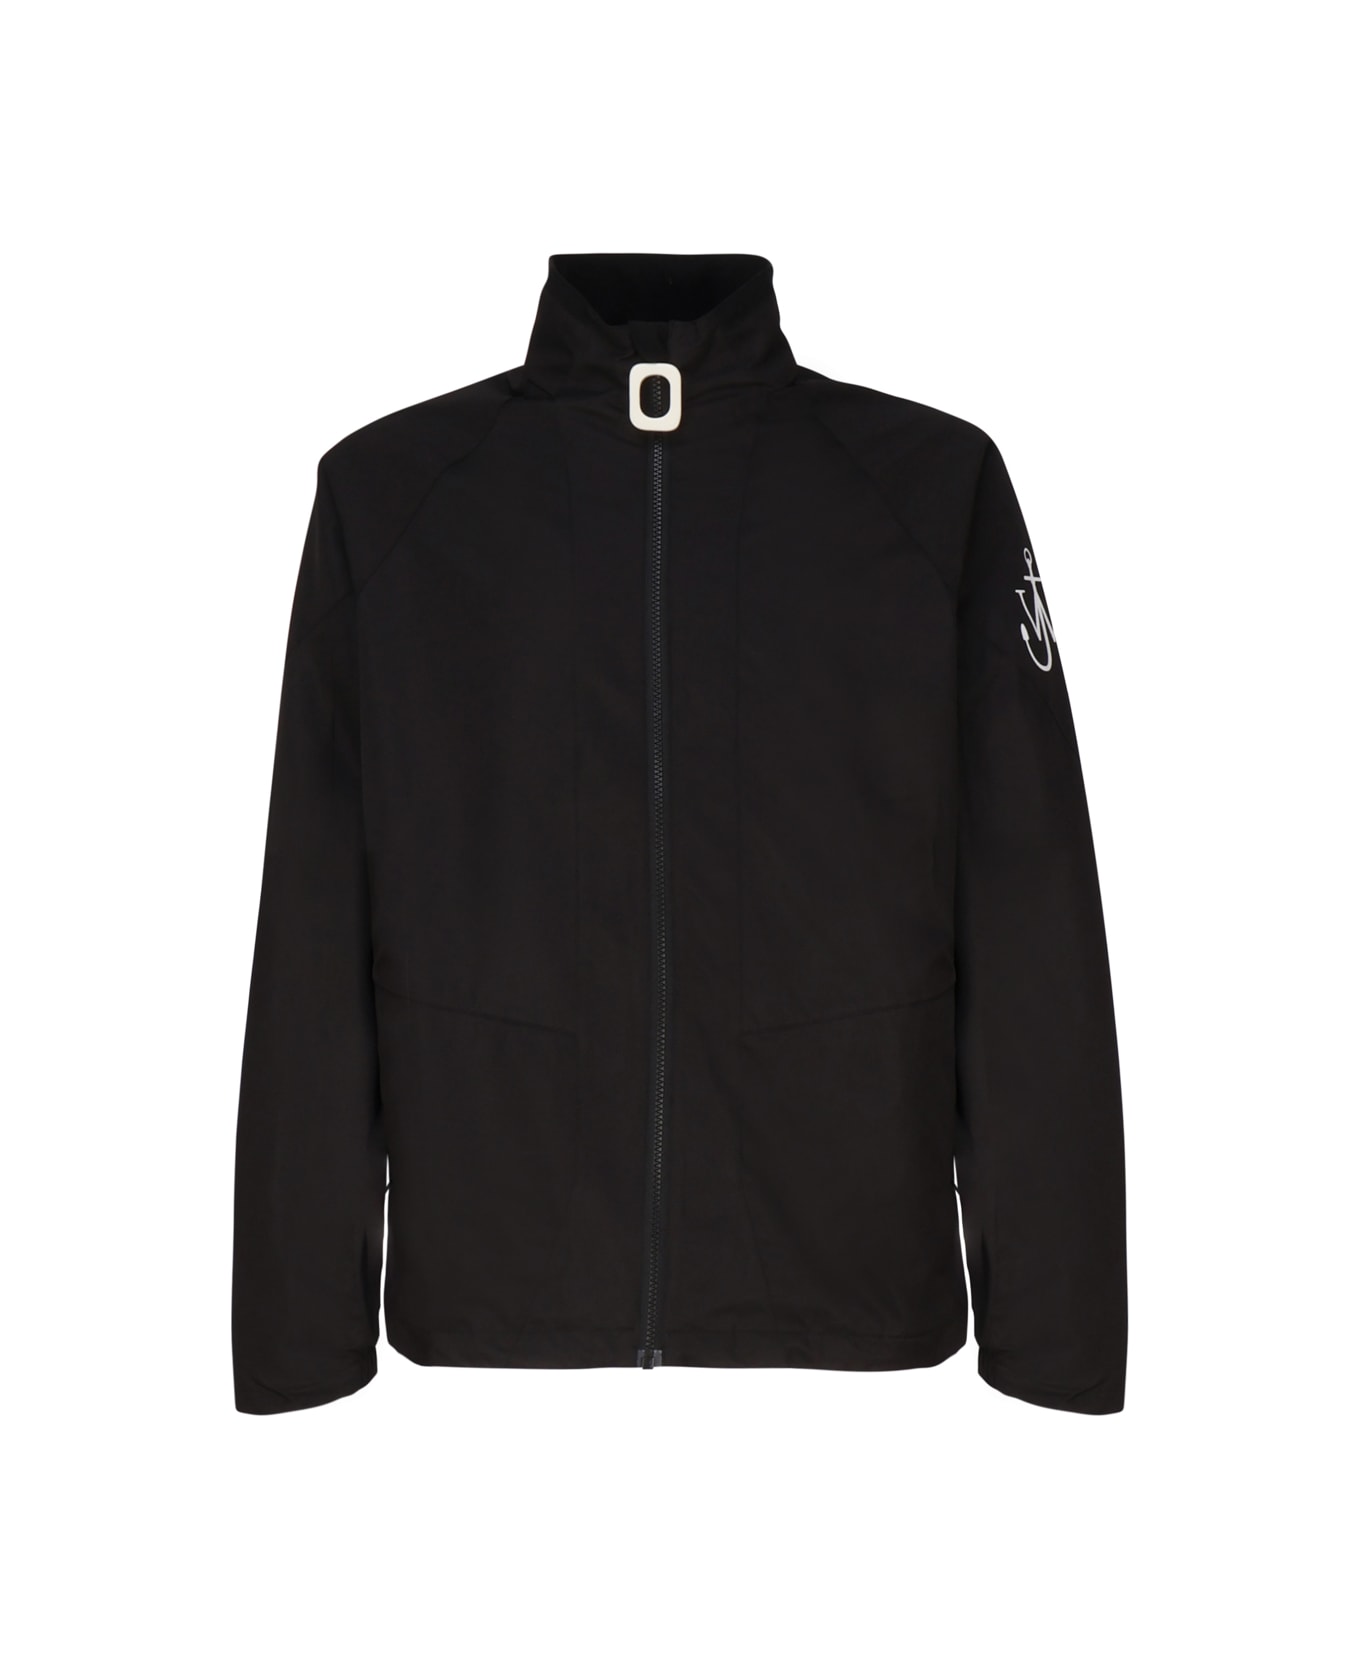 J.W. Anderson Sports Jacket With Zip - Black ジャケット